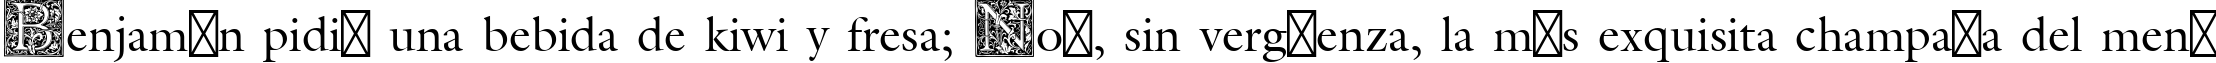 Пример написания шрифтом Medieval Initial One текста на испанском